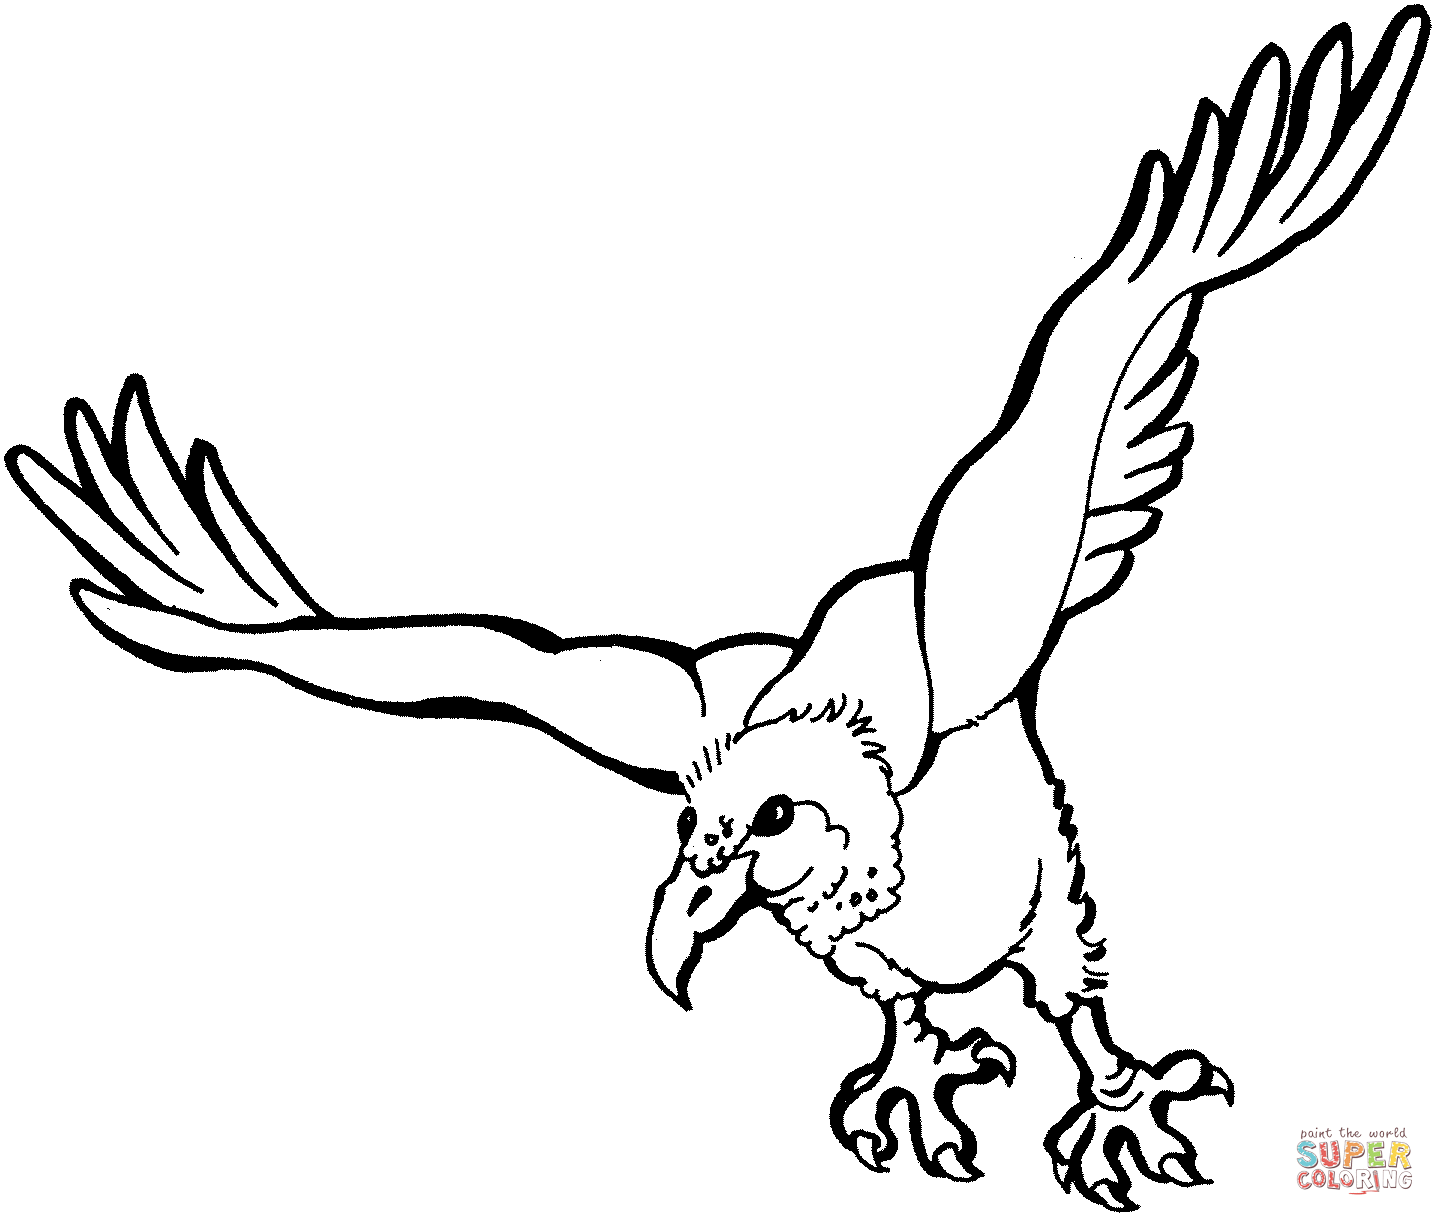 Vulture coloring #7, Download drawings